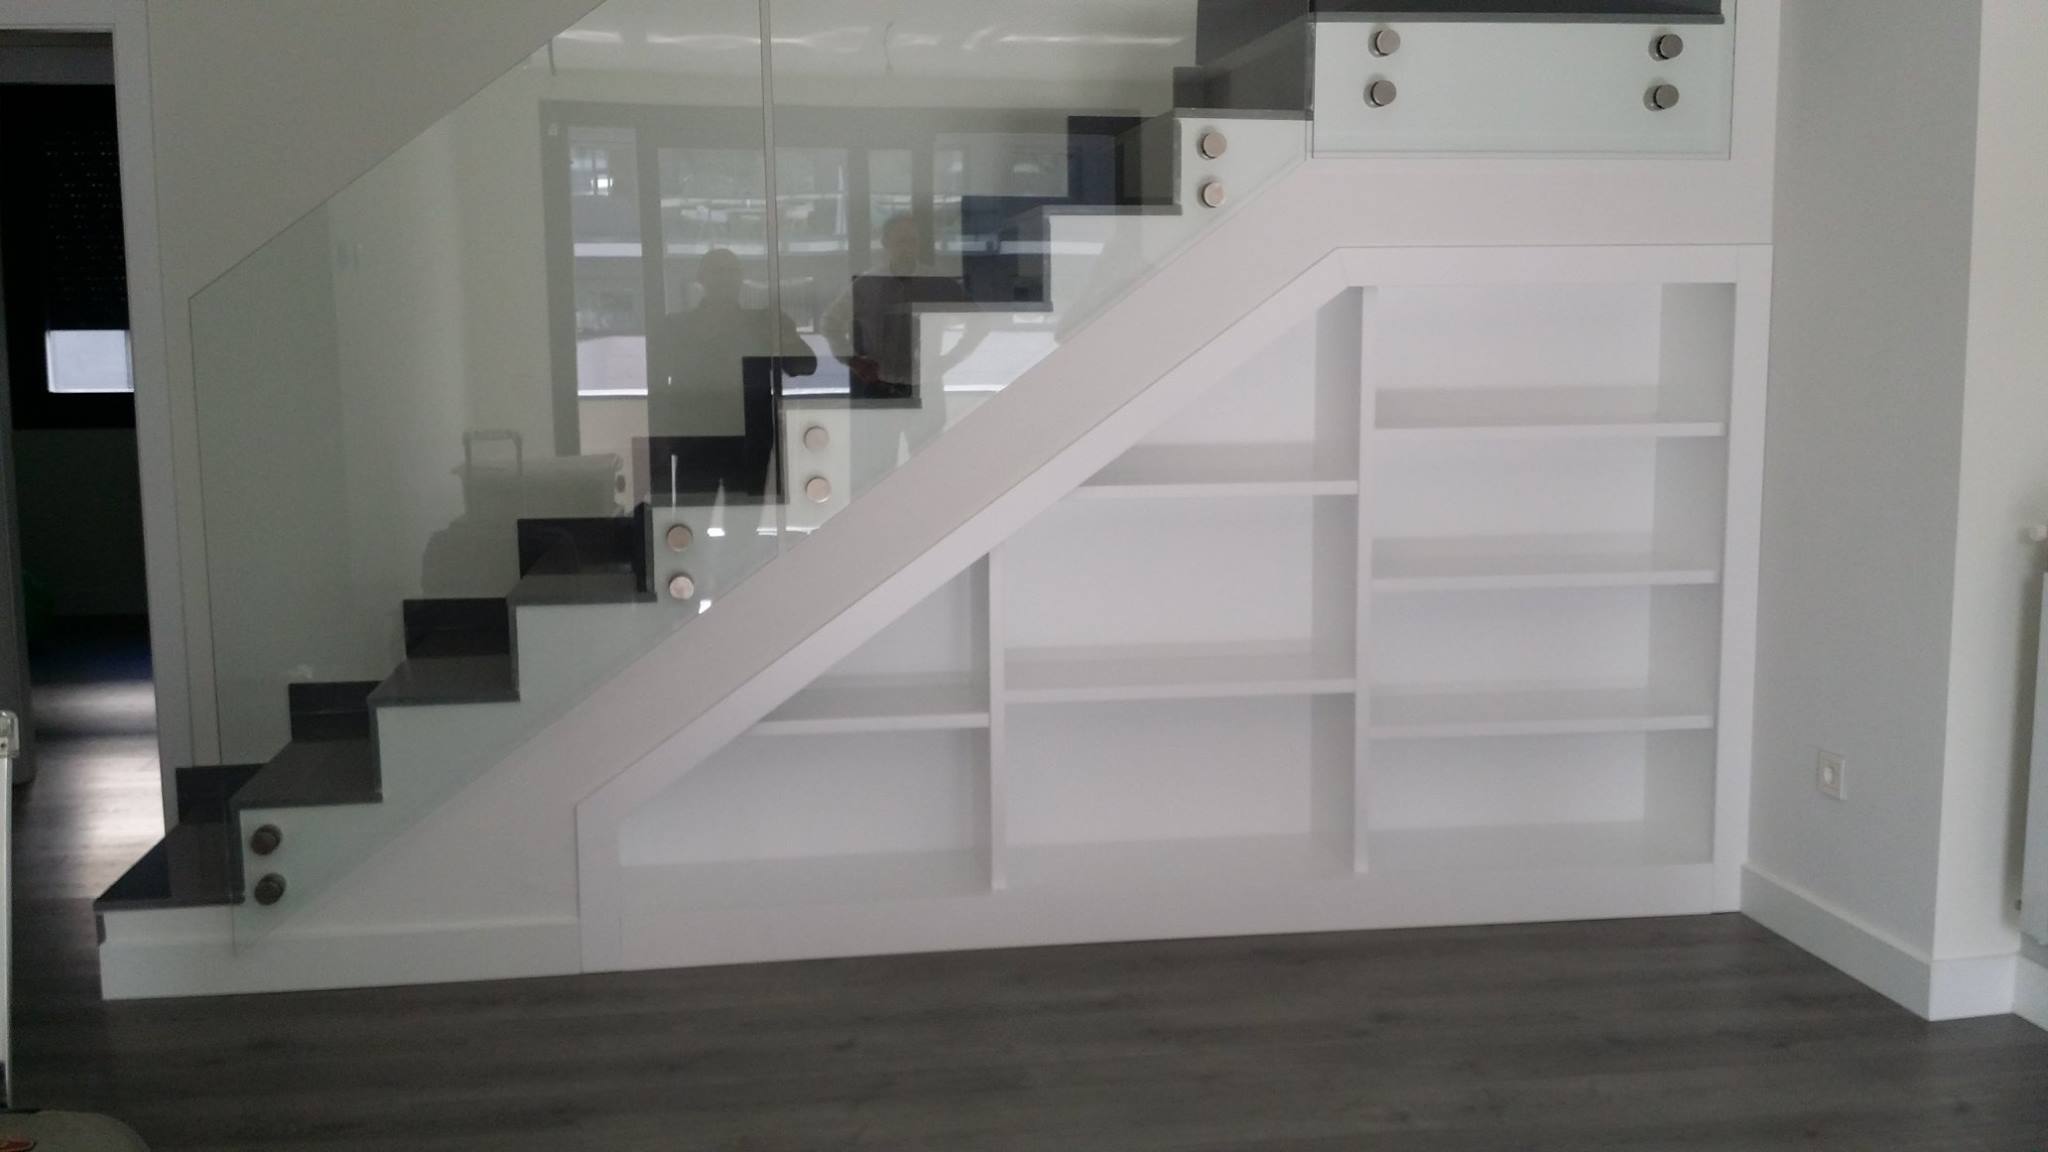 Fabricación de librería integrada en escalera